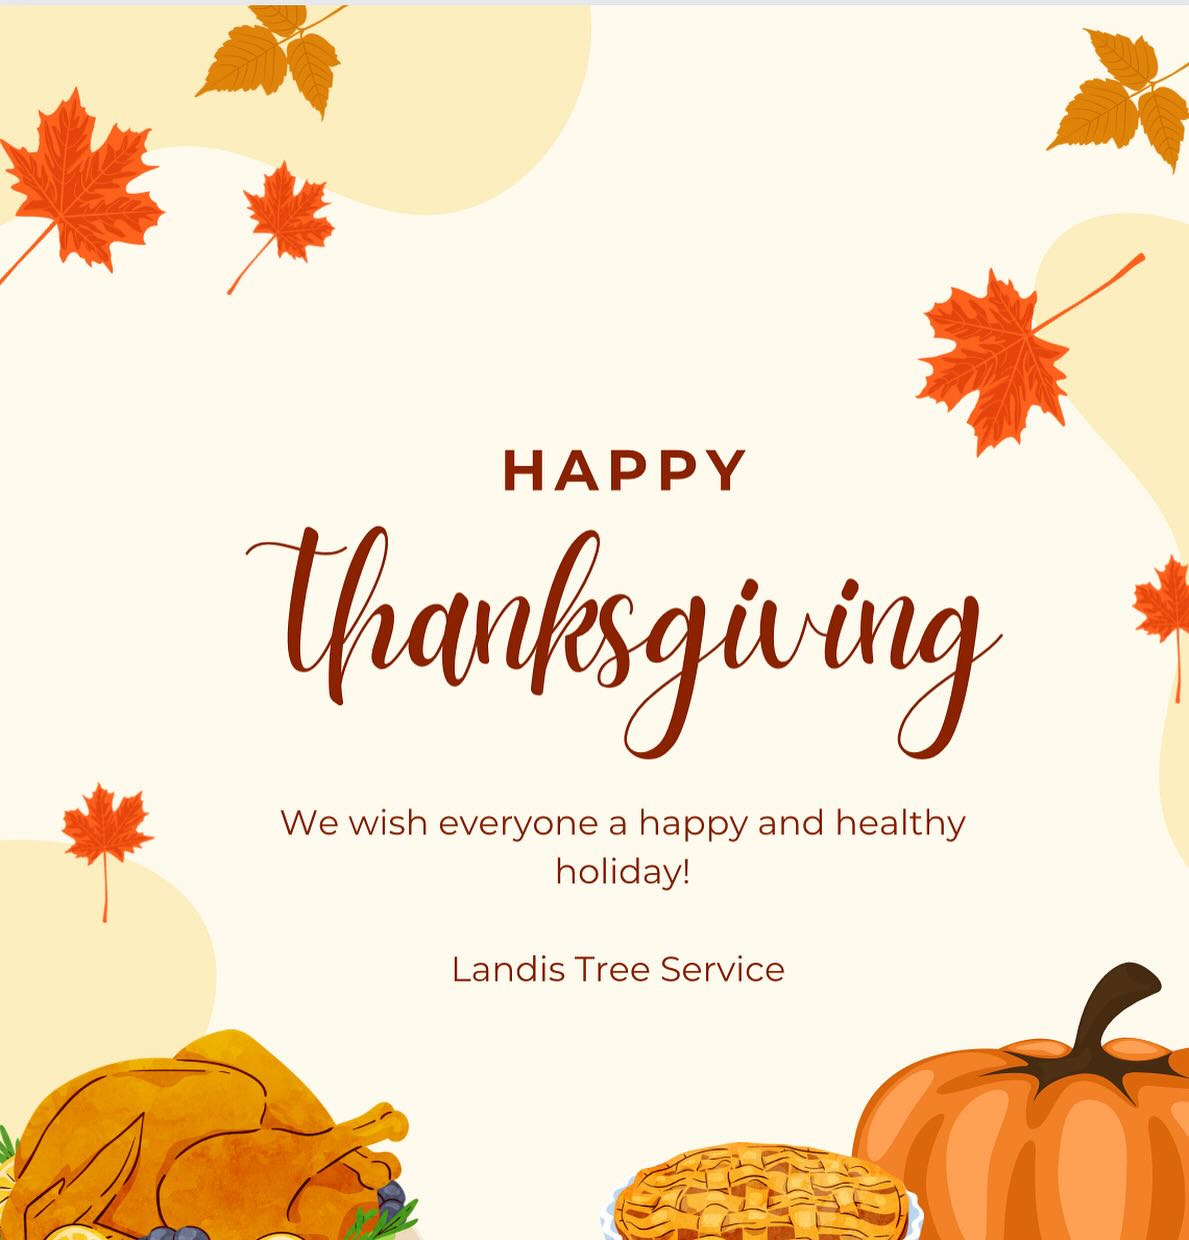 Landis Tree Service